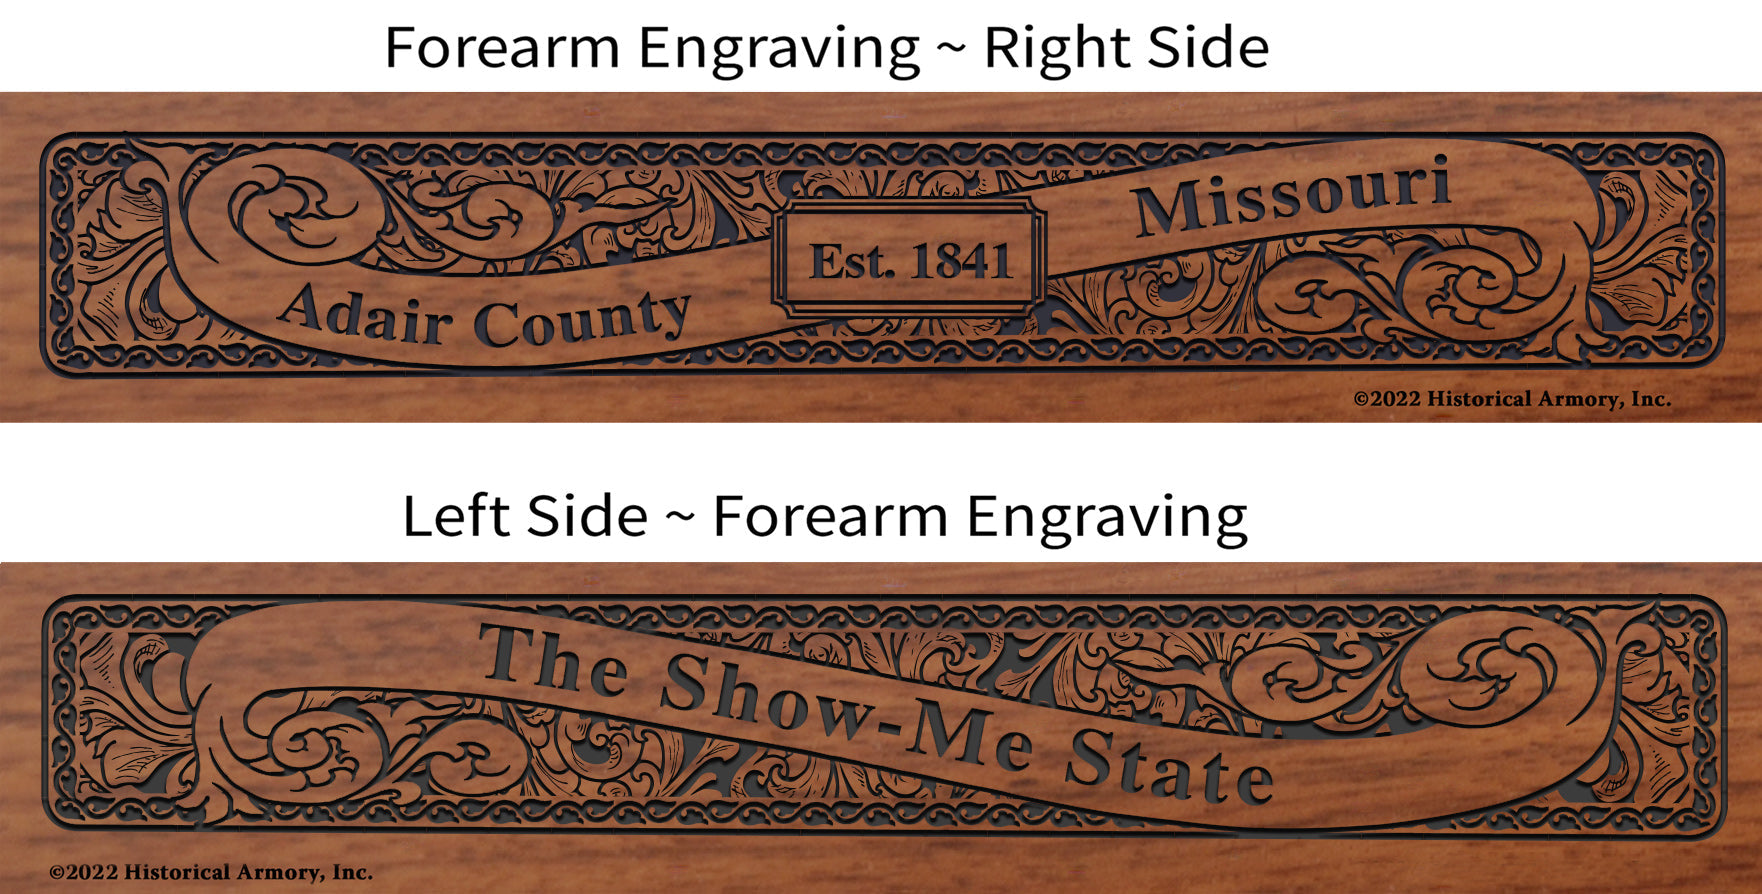 Adair County Missouri Engraved Rifle Forearm